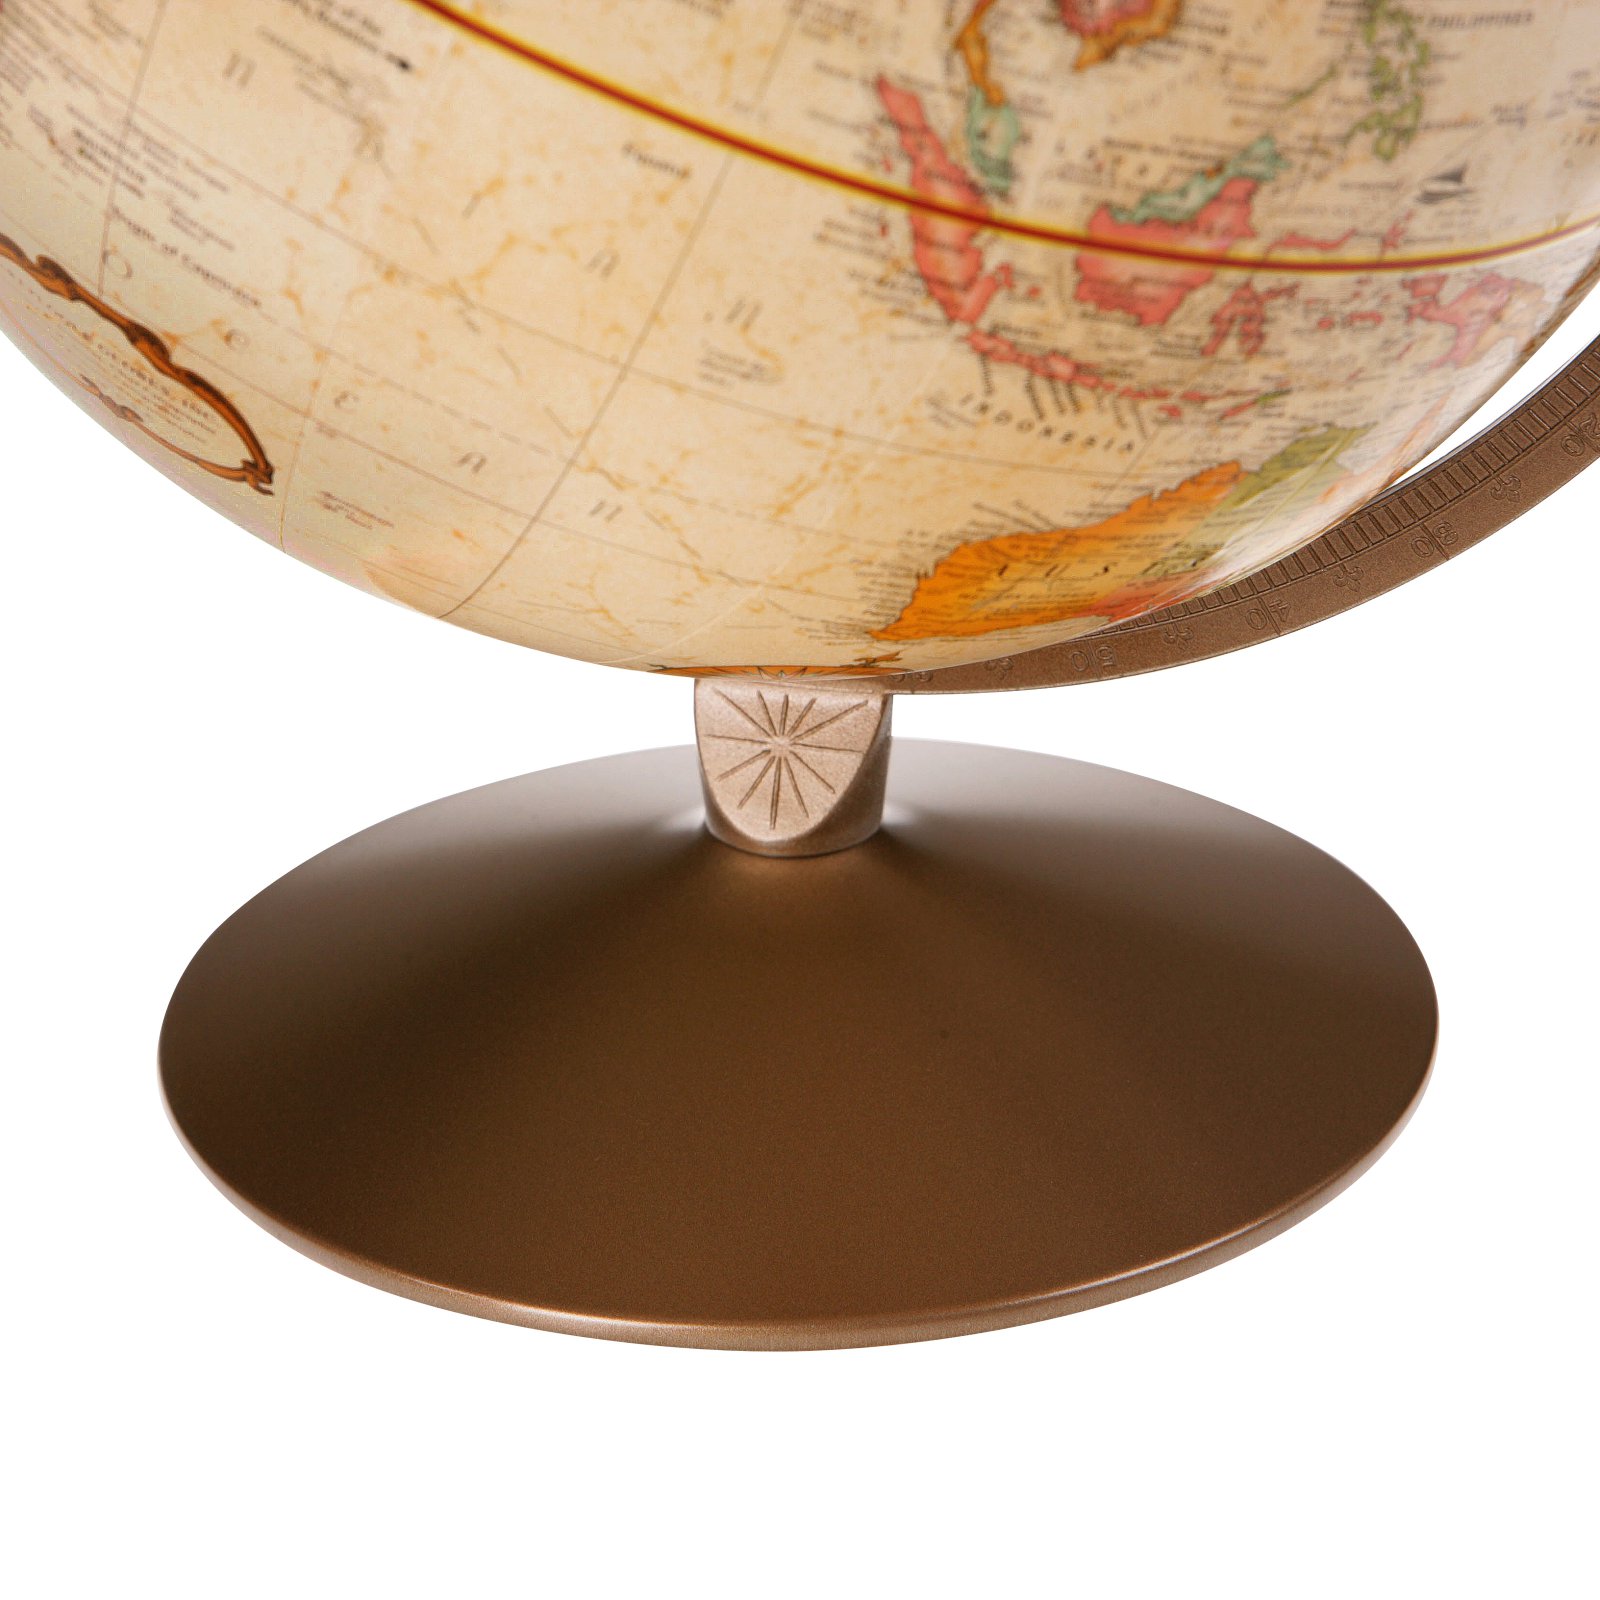 Replogle Globes The Franklin Globe 12" 1 Globe (RE-31501) - image 5 of 5